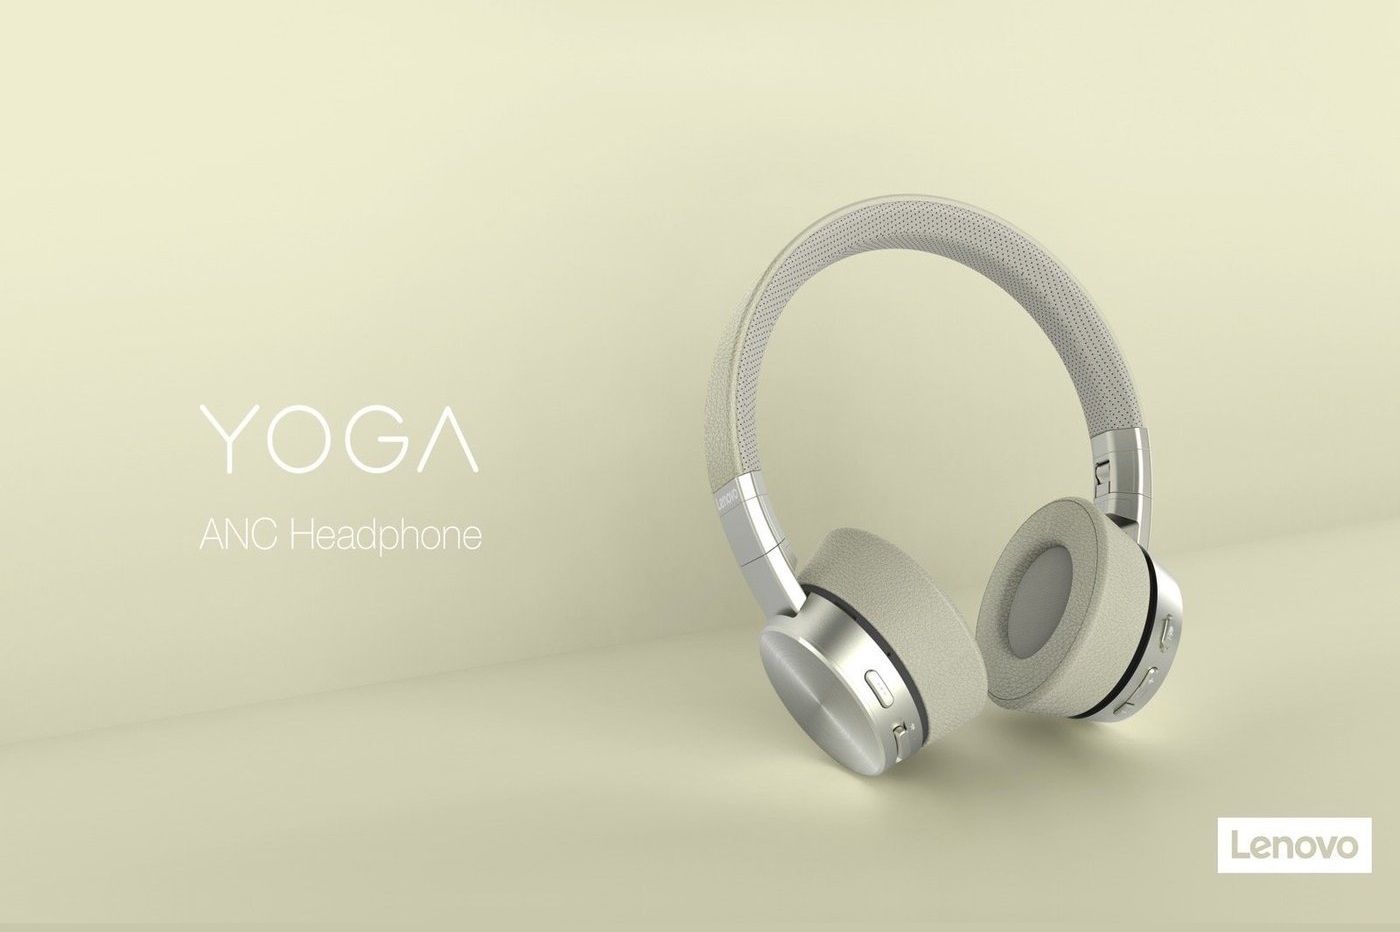 Lenovo launches Yoga ANC, noise canceling headphones